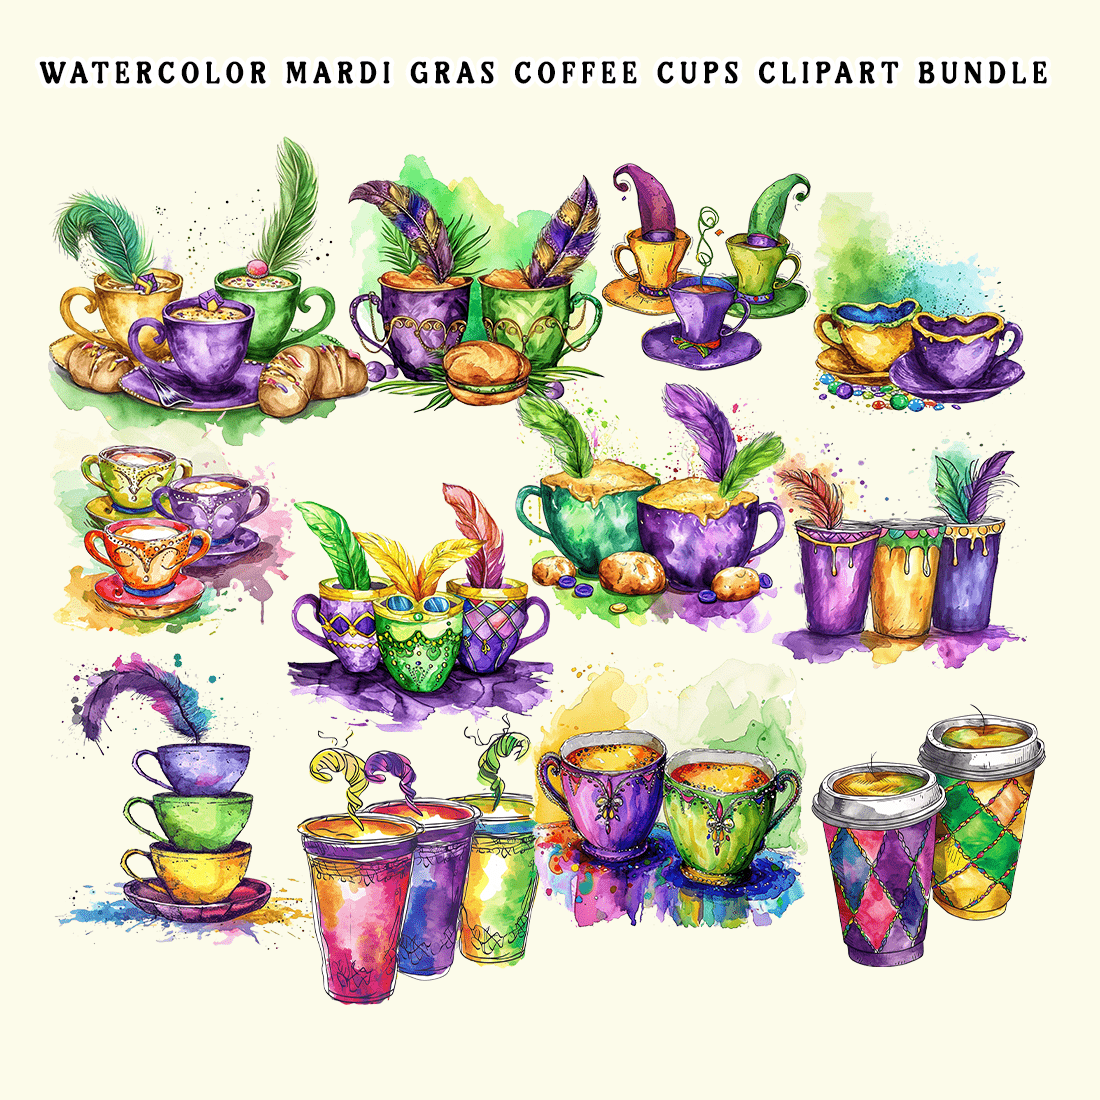 Watercolor Mardi Gras Coffee Cups Clipart Bundle preview image.